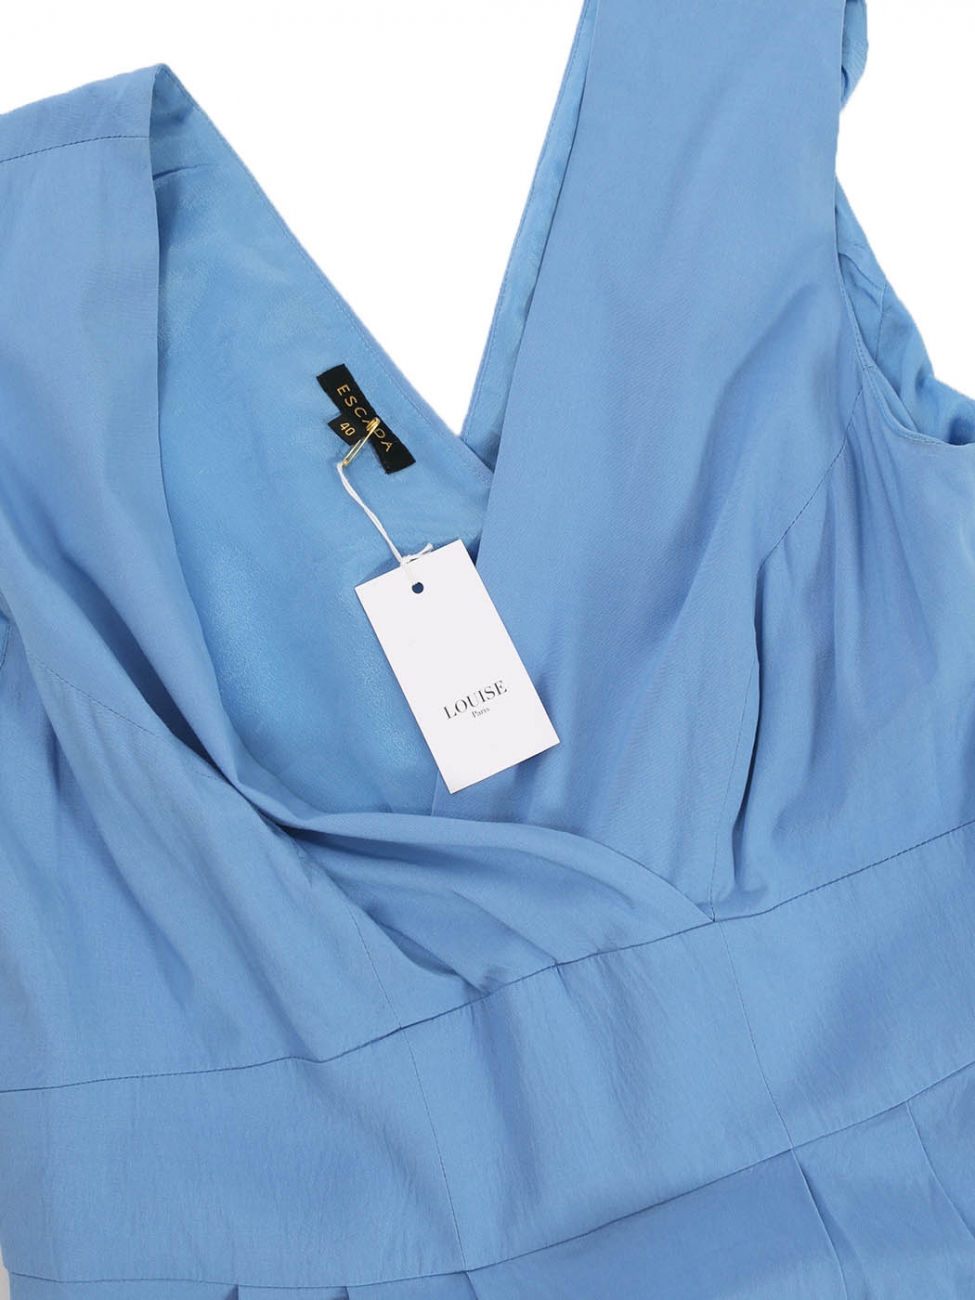 Boutique ESCADA Light blue satin price €1300 Retail dress large V strap neckline Size 40/42